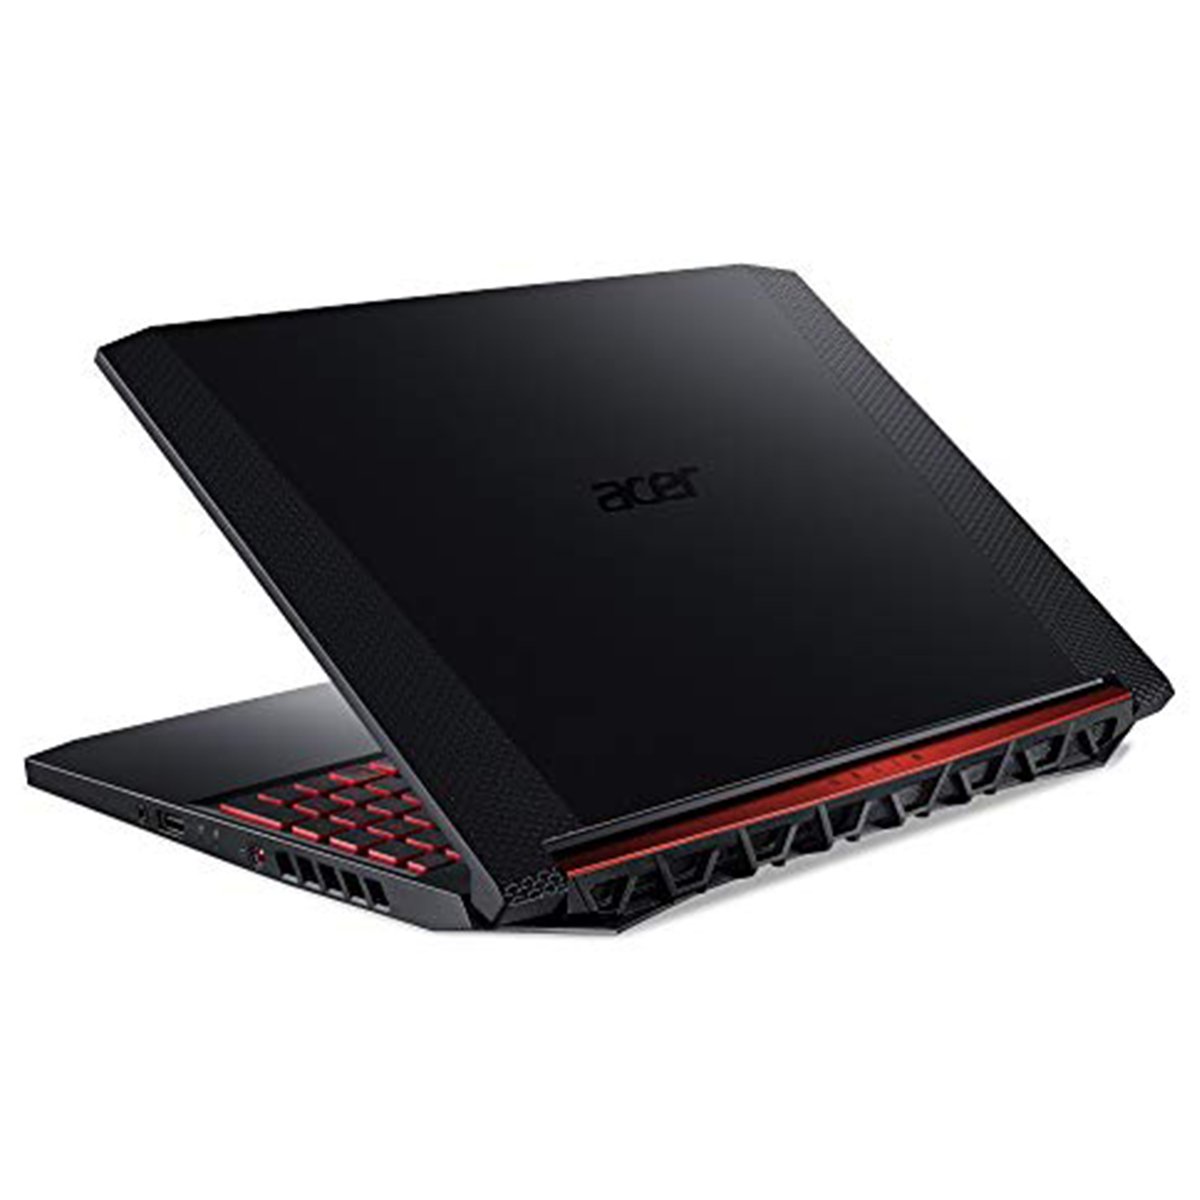 Acer Gaming Notebook Nitro-NH.Q59EM.021,15.6 Inch FHD IPS, Intel Core i7-9750H,1TB HDD,256GB SSD, 16GB RAM,NVIDIA GeForce GTX 1650,Black